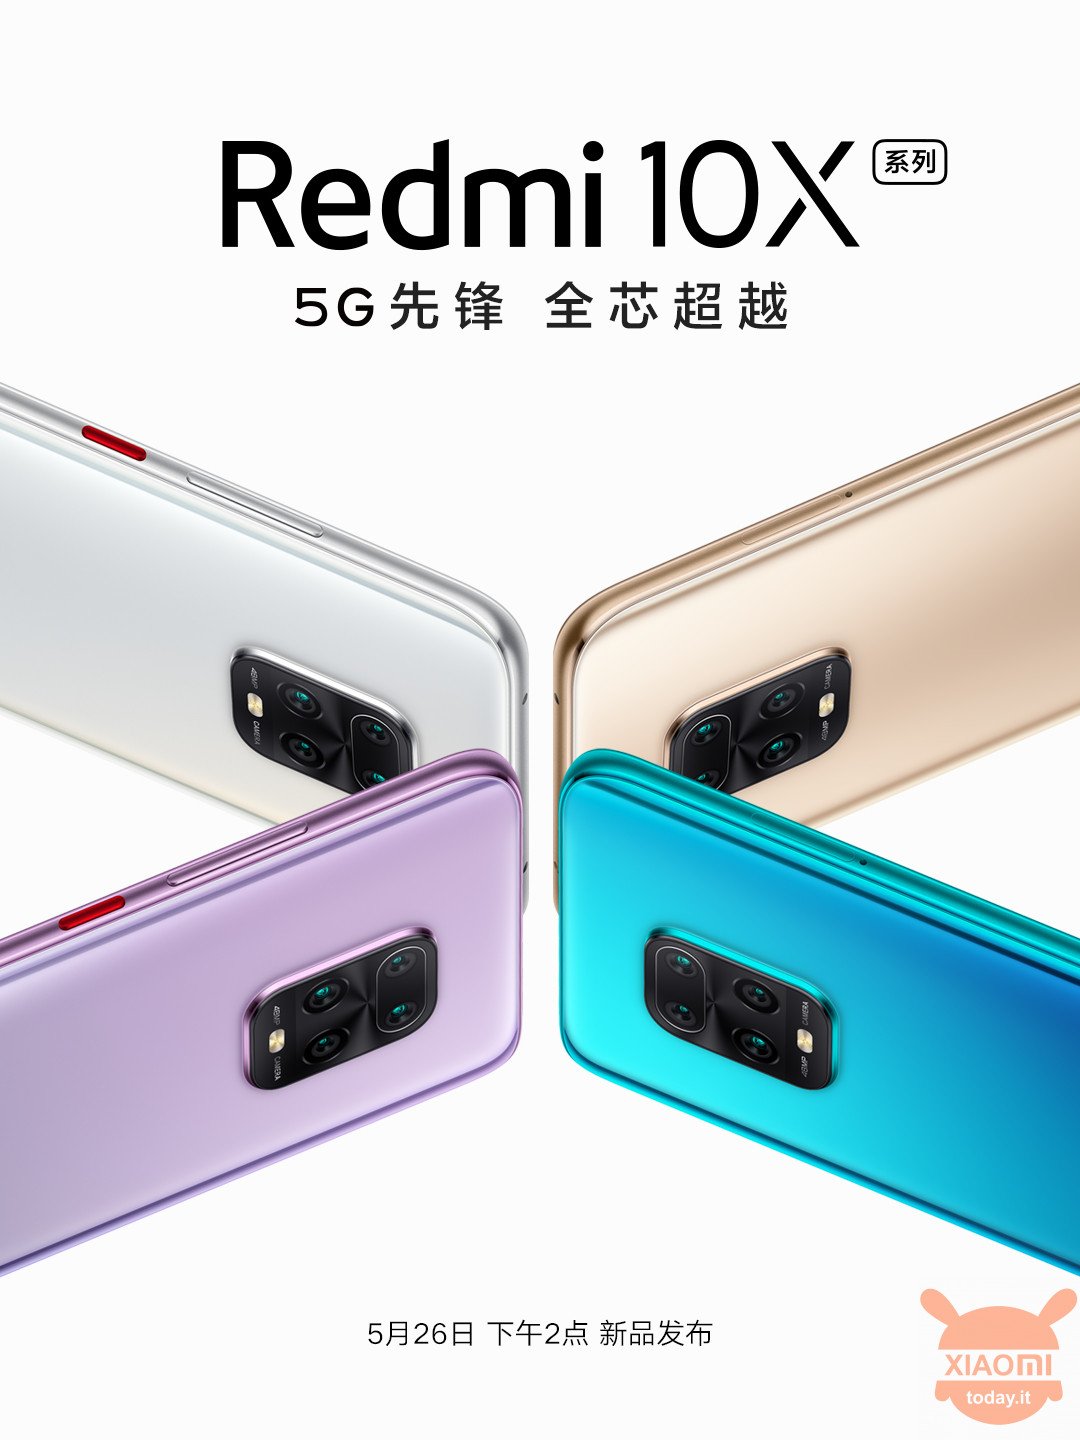 Redmi 10X Pioneer Edition